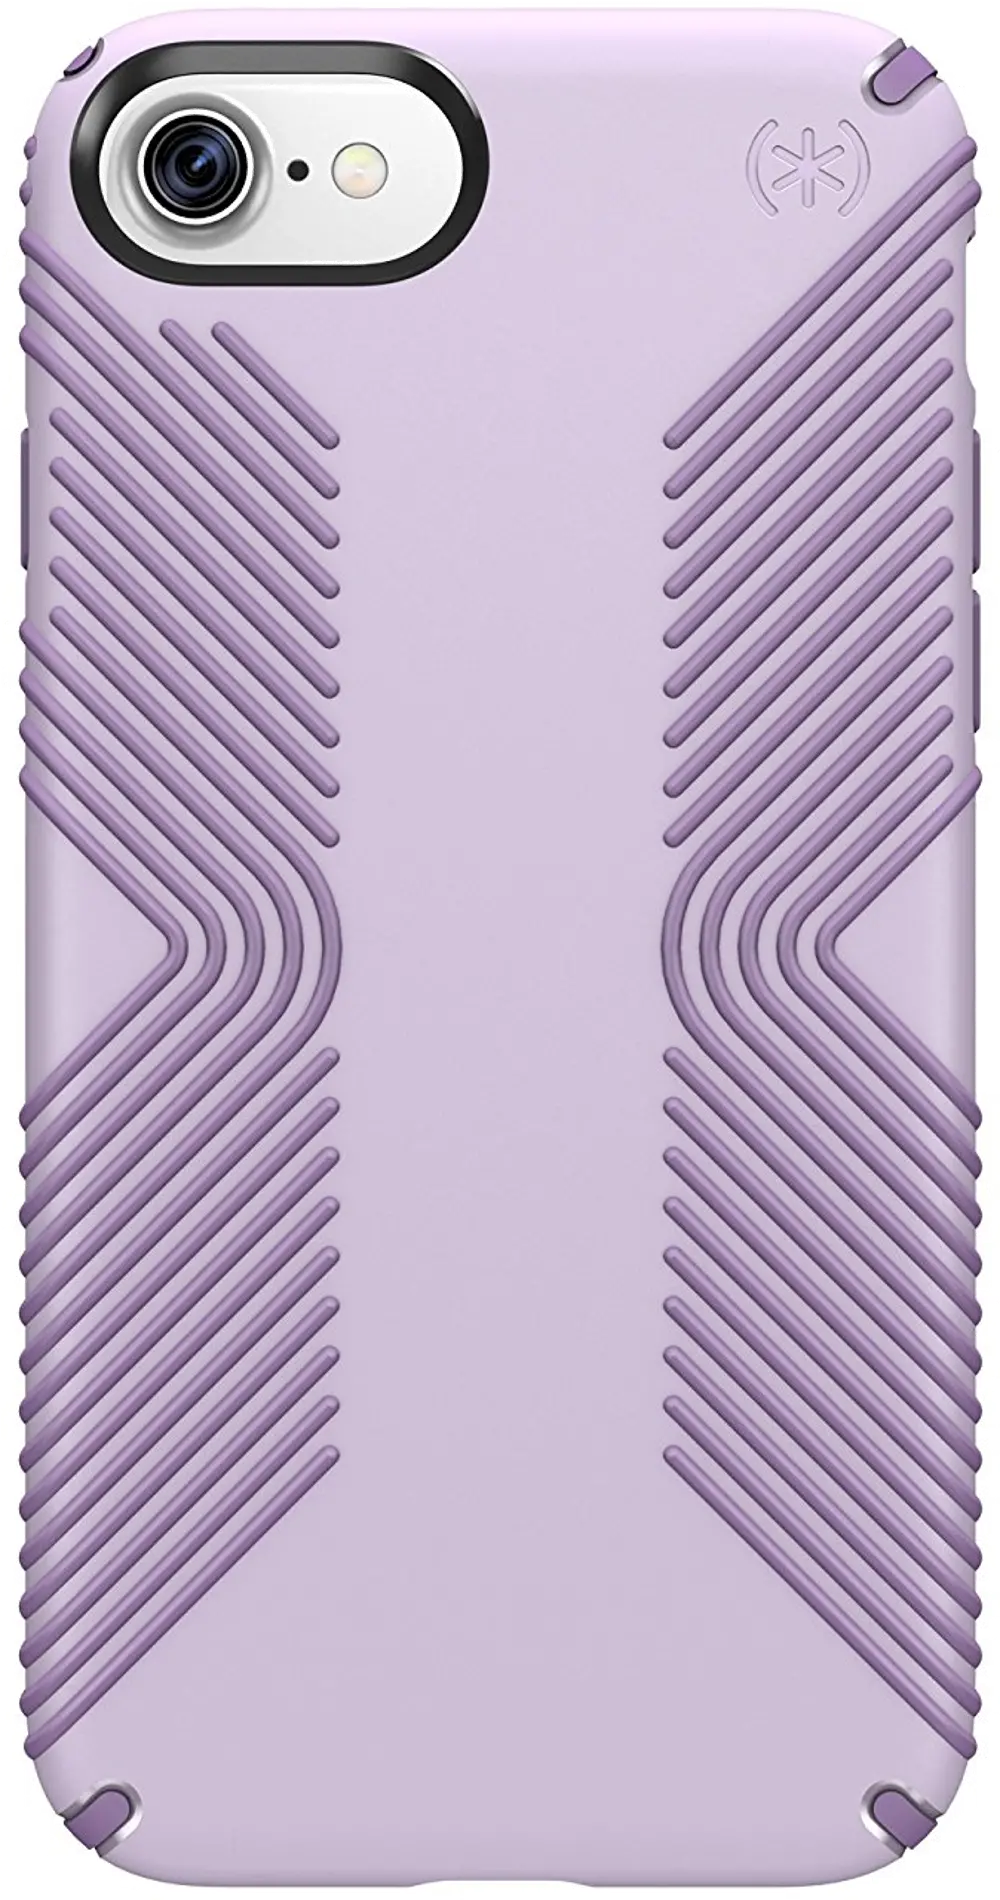 Speck Presidio Grip Case for iPhone 7 - Purple-1